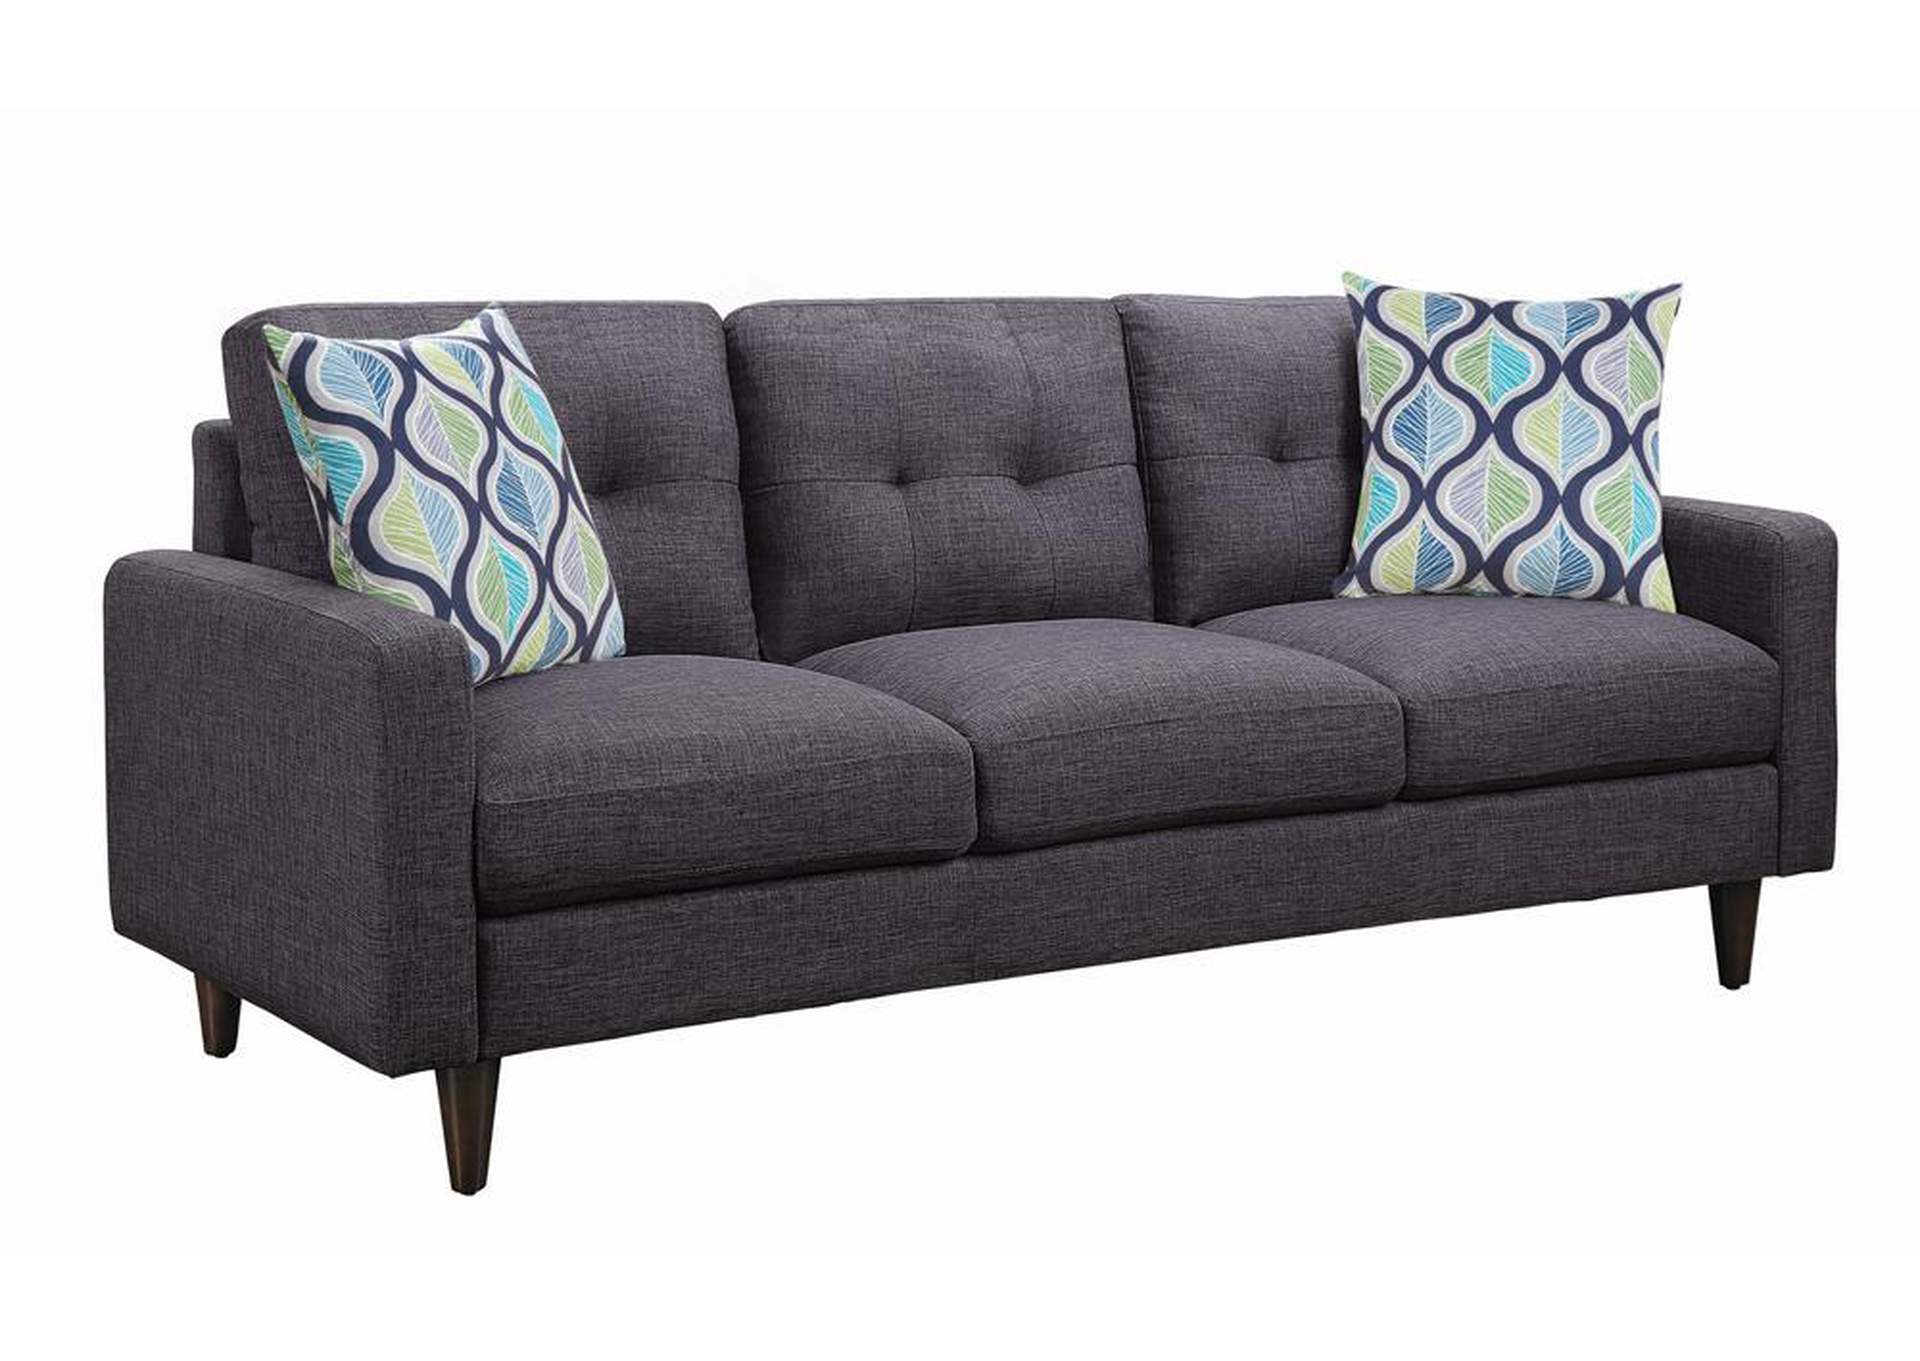 St-206 Grey Sofa,Coaster Furniture